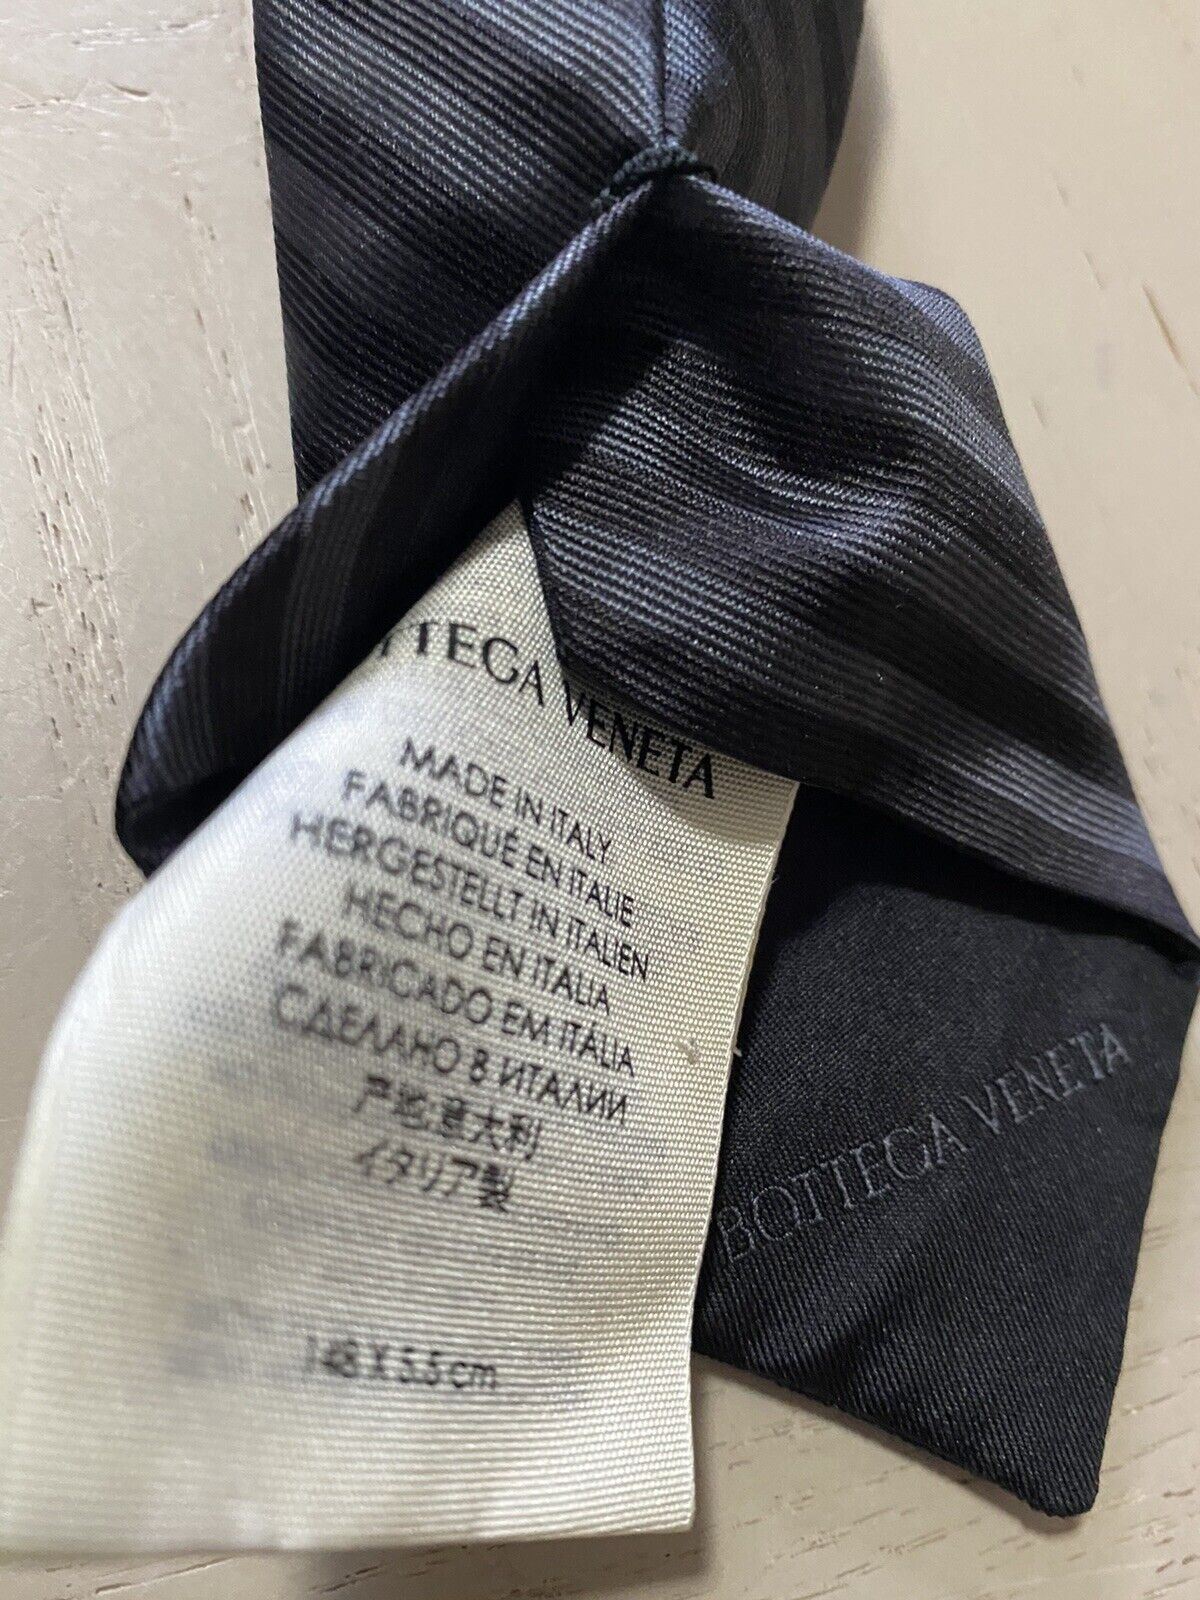 New Bottega Veneta Skinny Silk Neck Tie Petroleum Black-Anthracite made in Italy